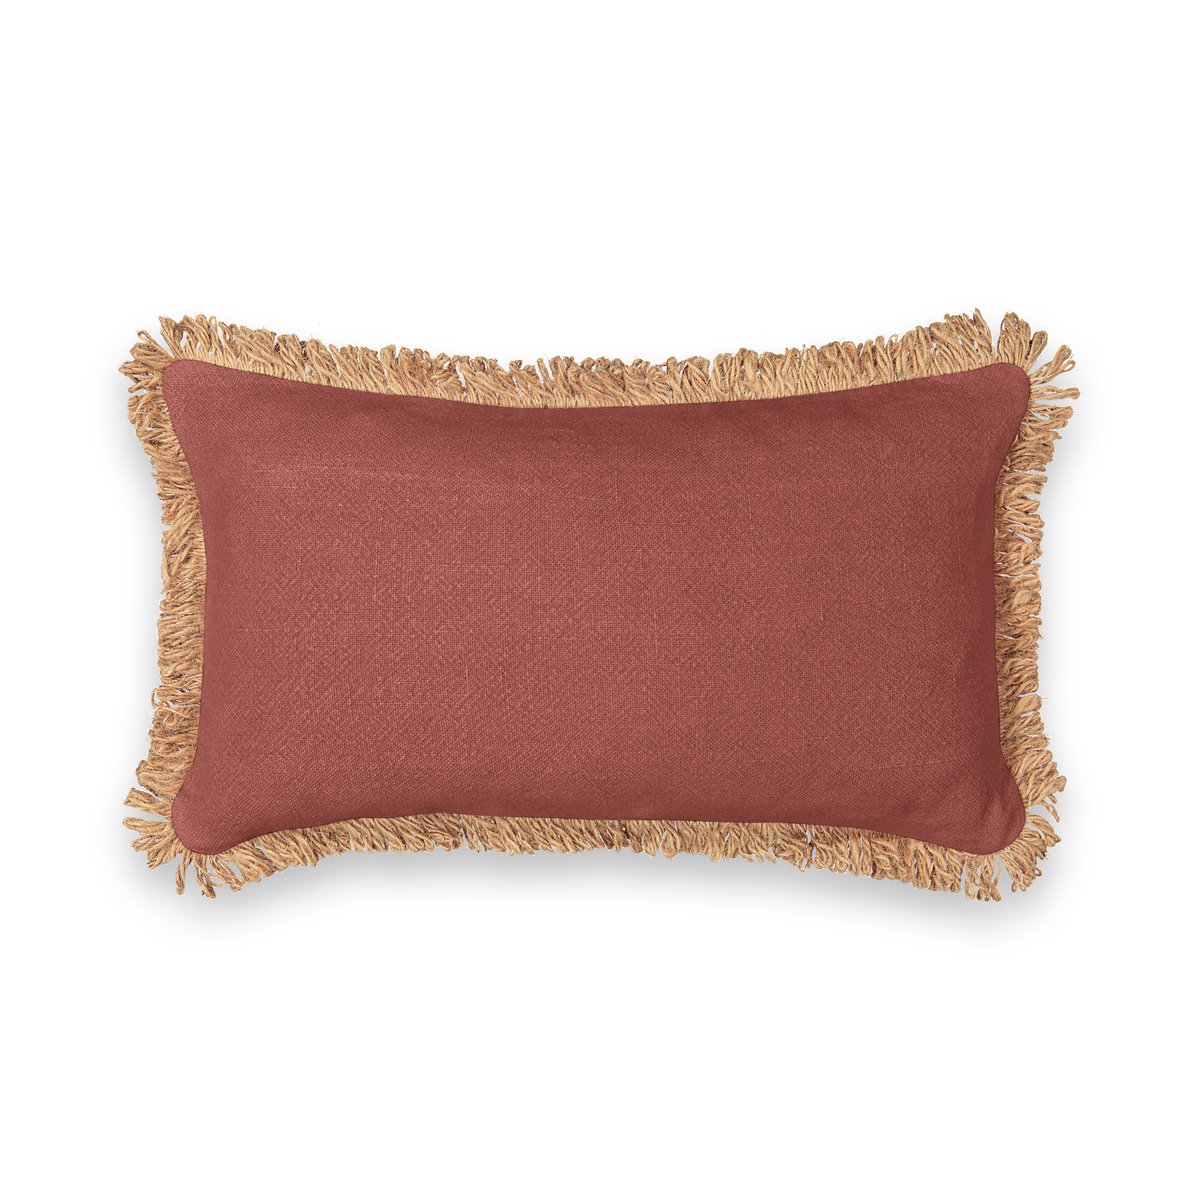 Чехол La Redoute На подушку из джута Jutty 50 x 30 см красный, размер 50 x 30 см - фото 2